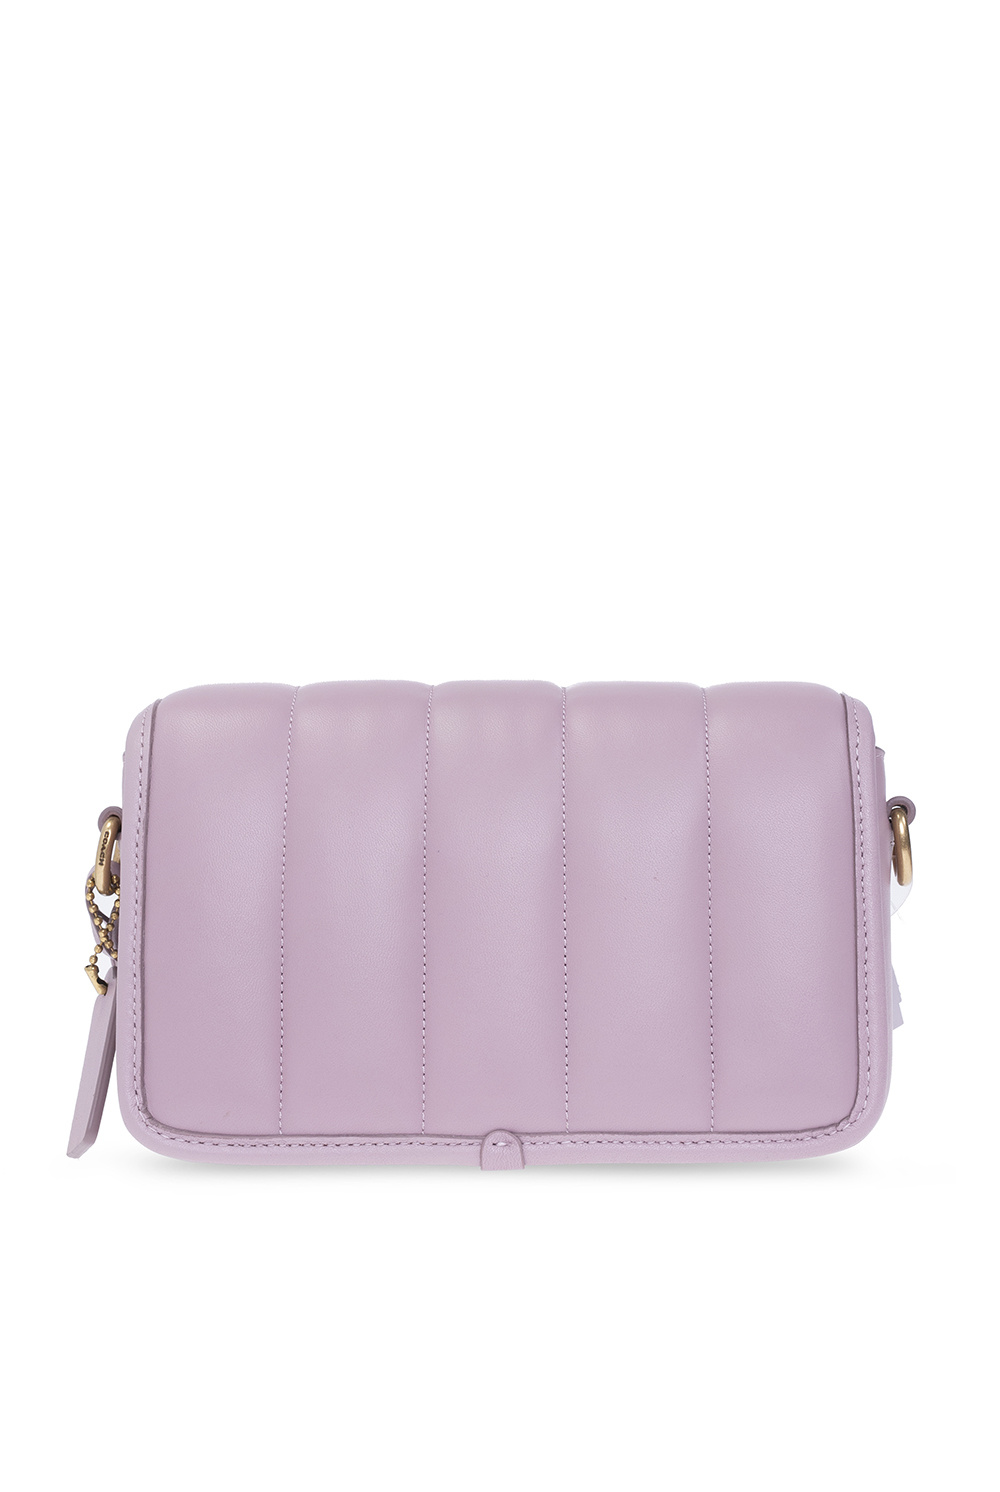 Coach dark purple leather floral shoulder bag – My Girlfriend's Wardrobe LLC